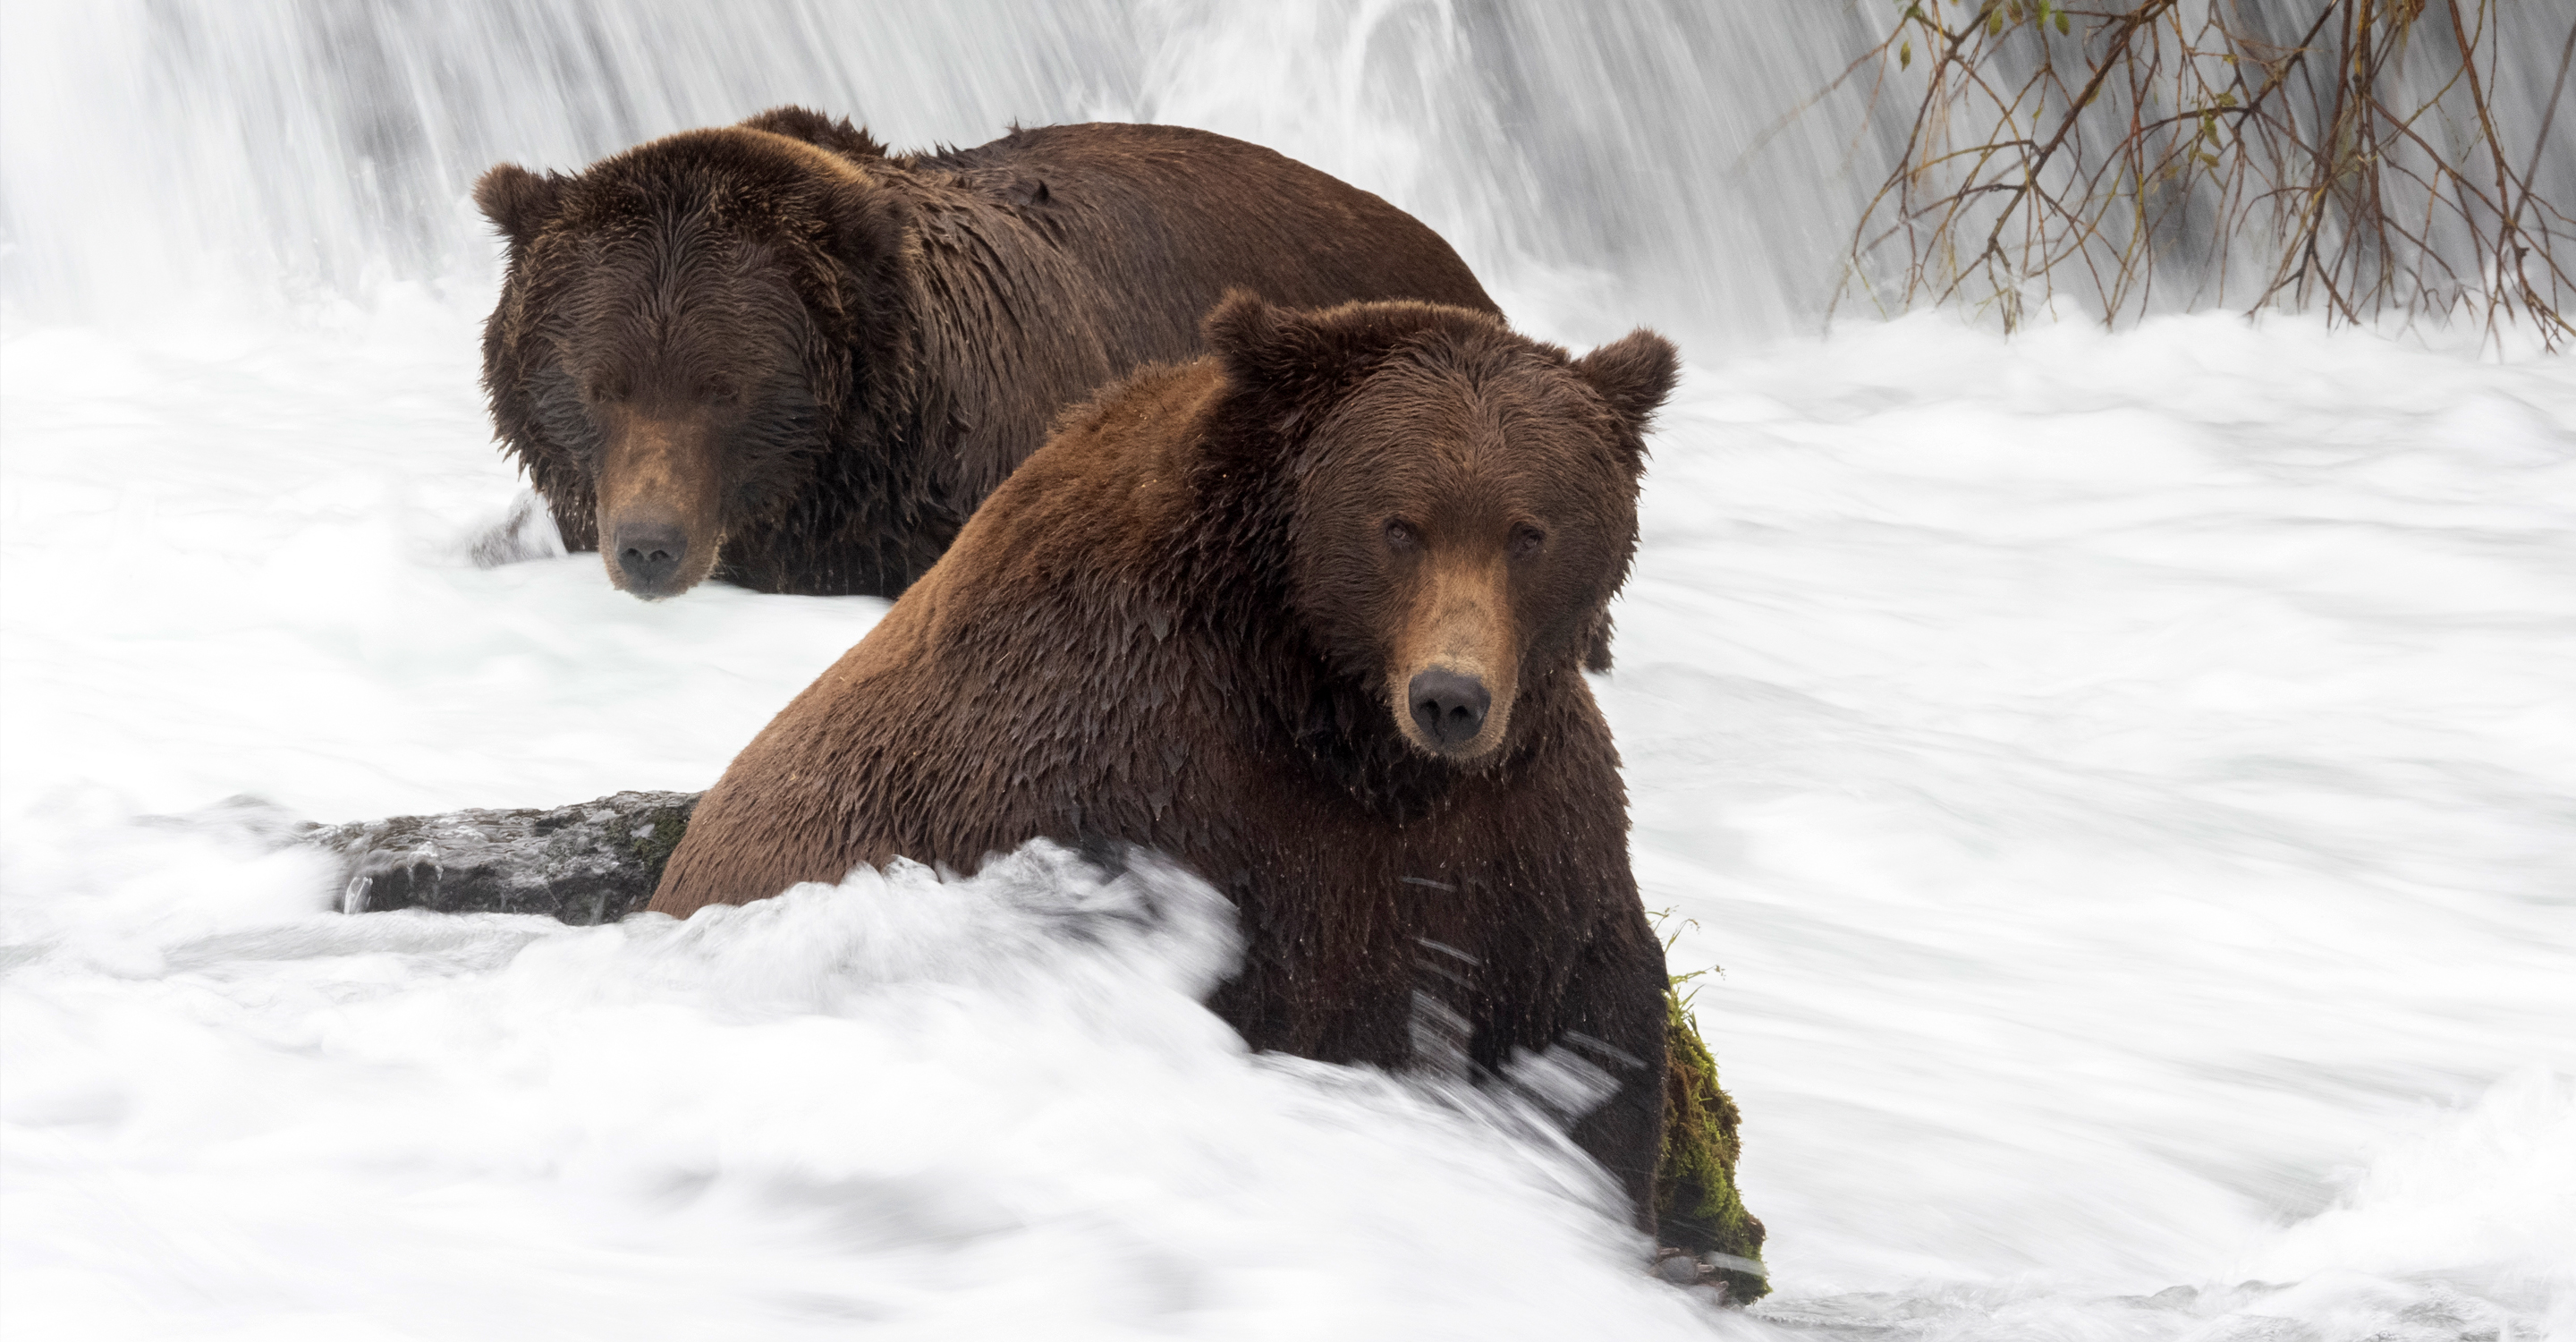 Two brown bears sit in Brooks Falls waiting for salmon, Alaska, USA